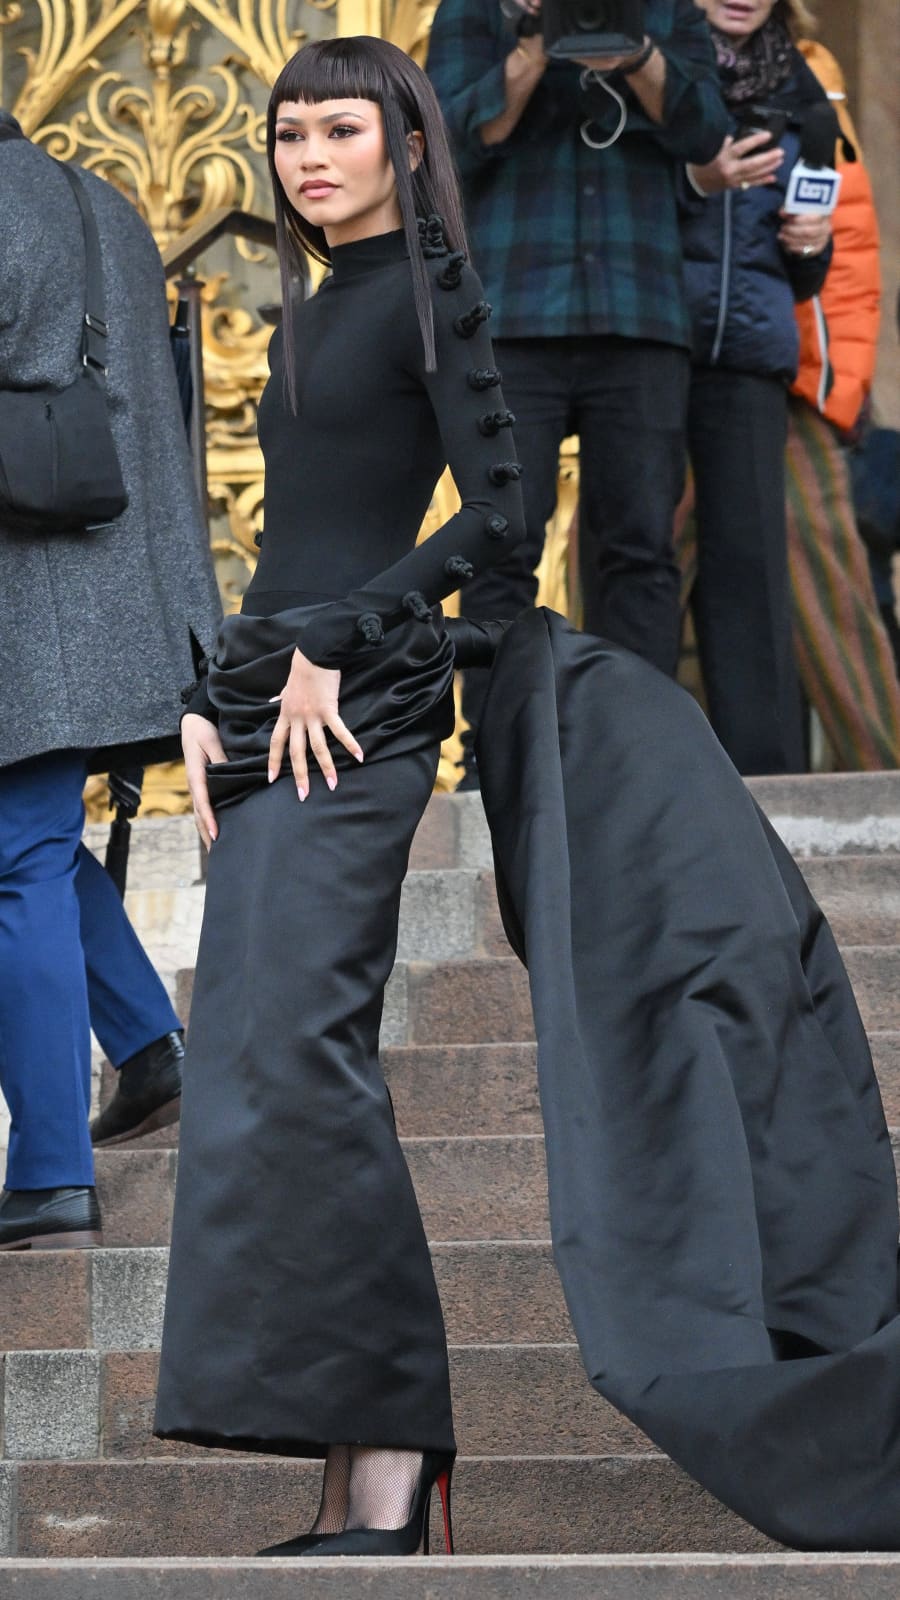 Zendaya Slays Paris Fashion Week With Edgy Bangs And All-Black Look